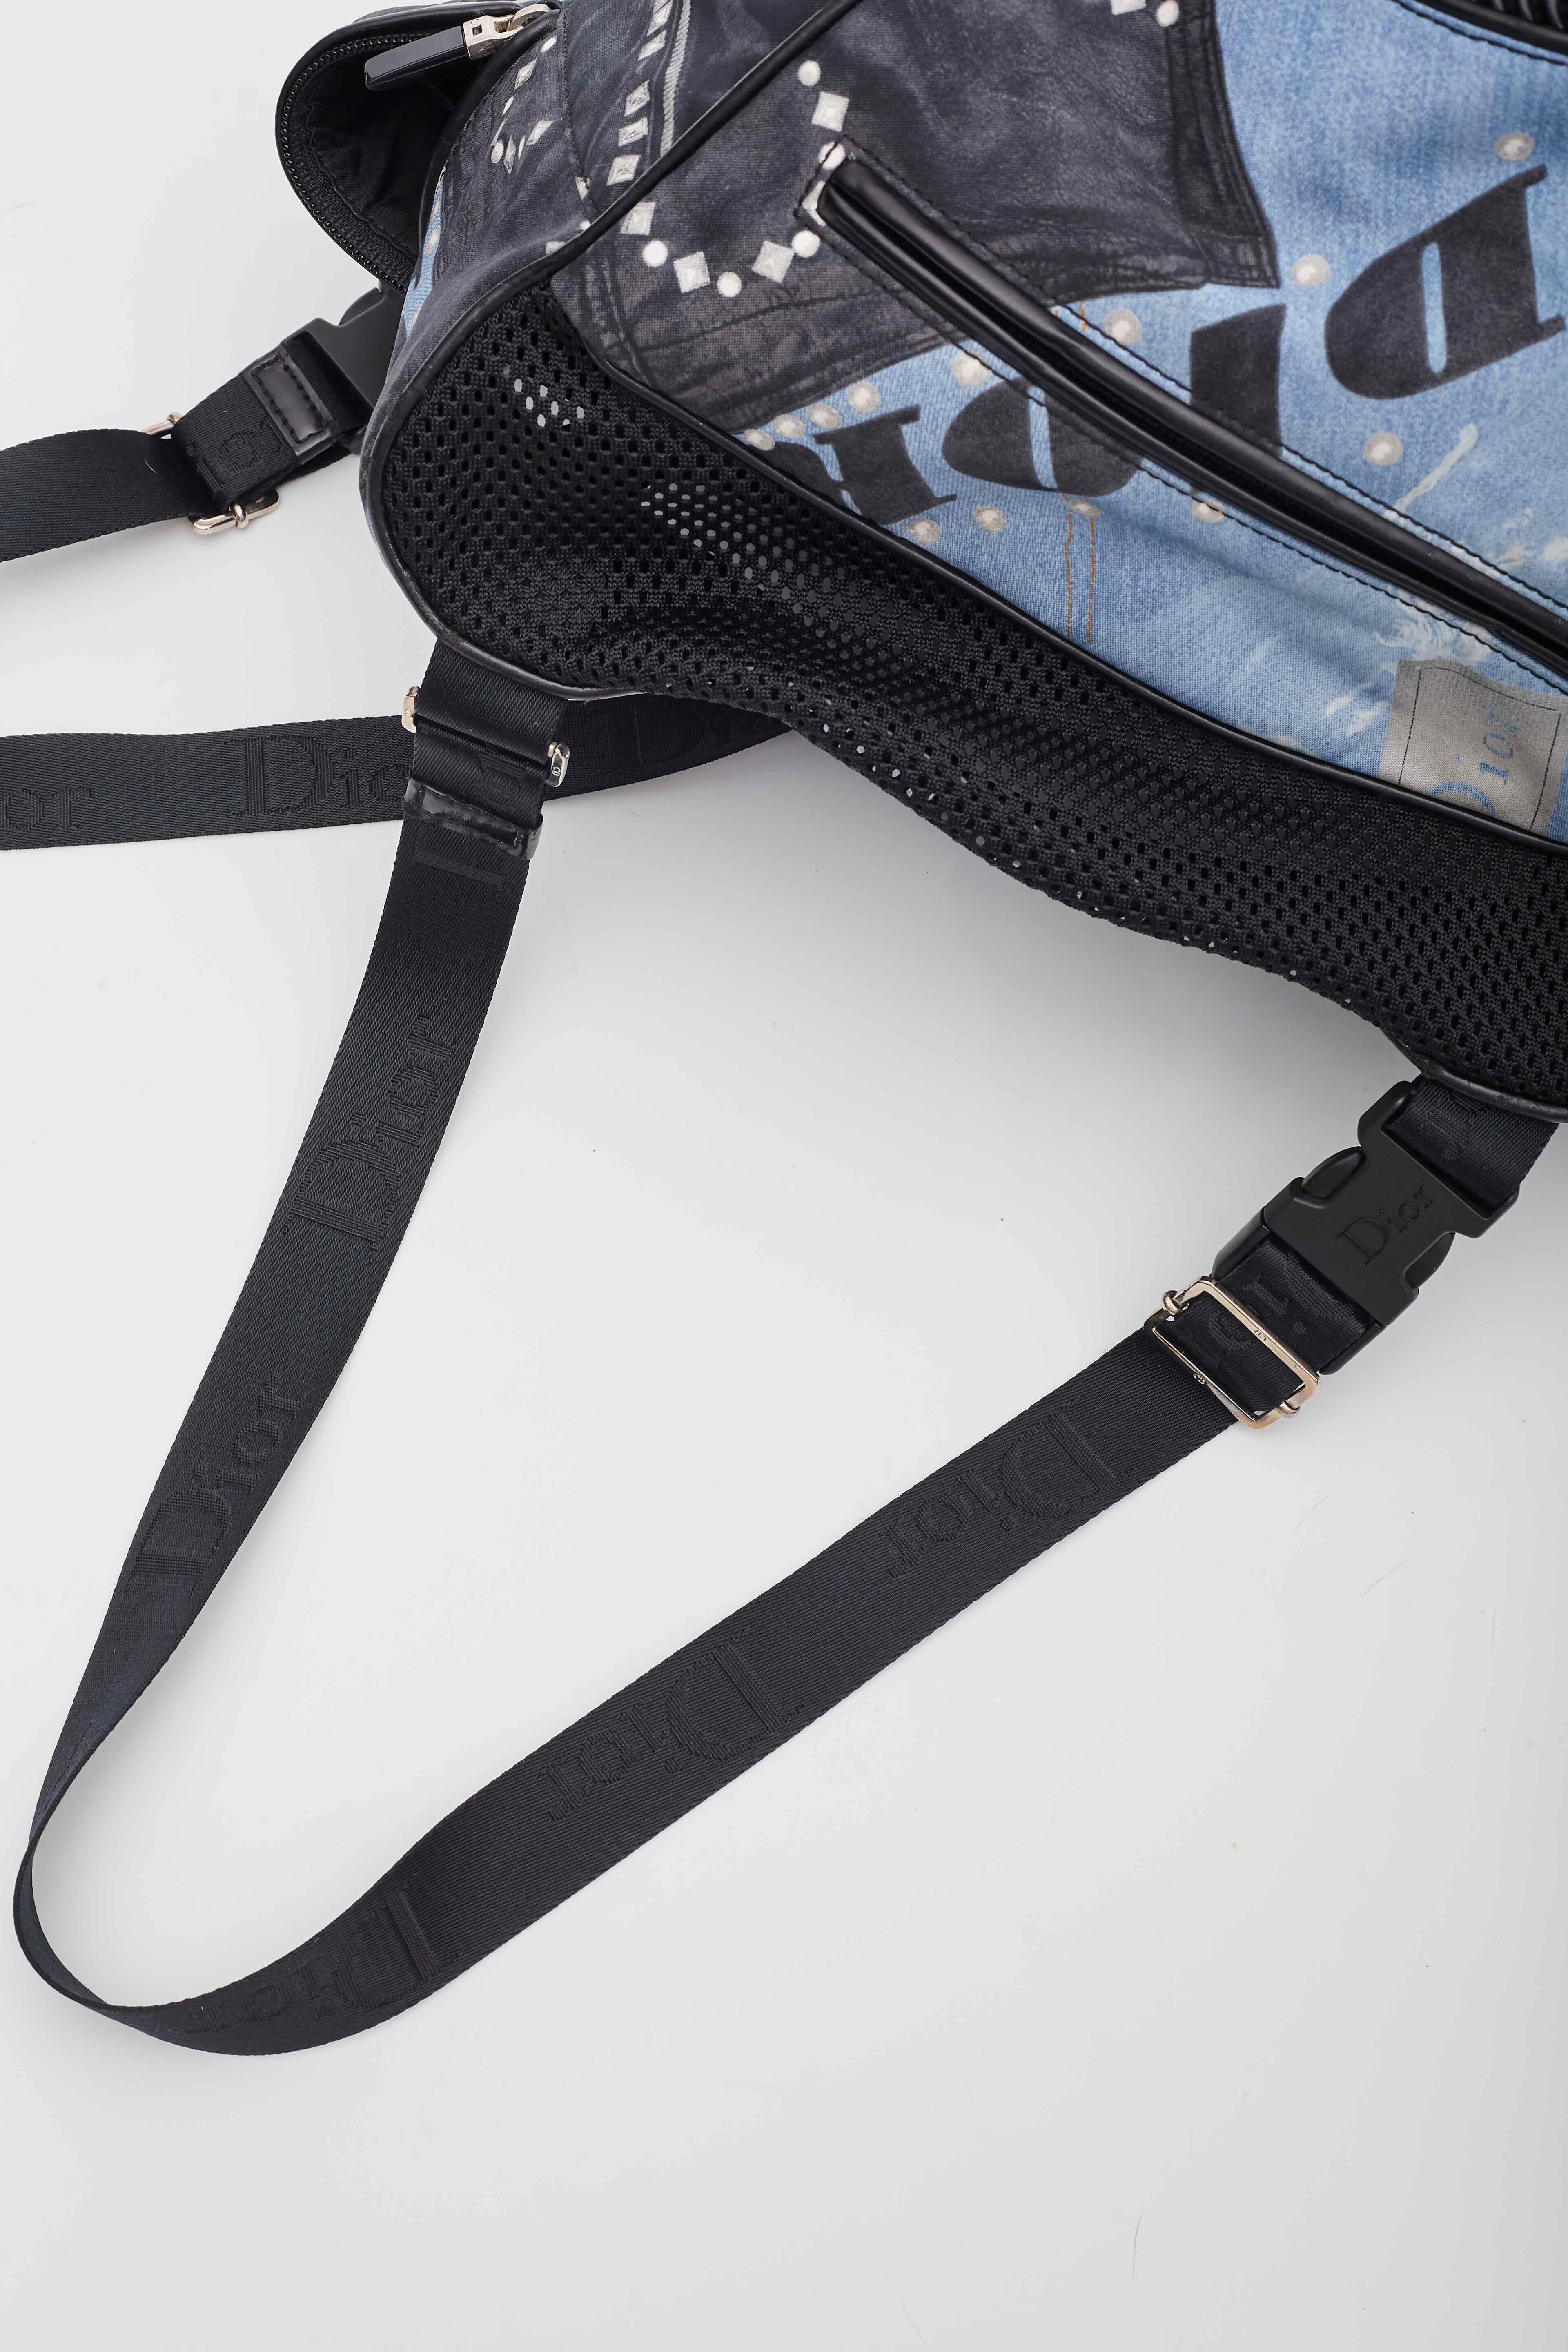 Dior Black And Blue Denim Patches Dog Carrier Travel Bag For Sale 6